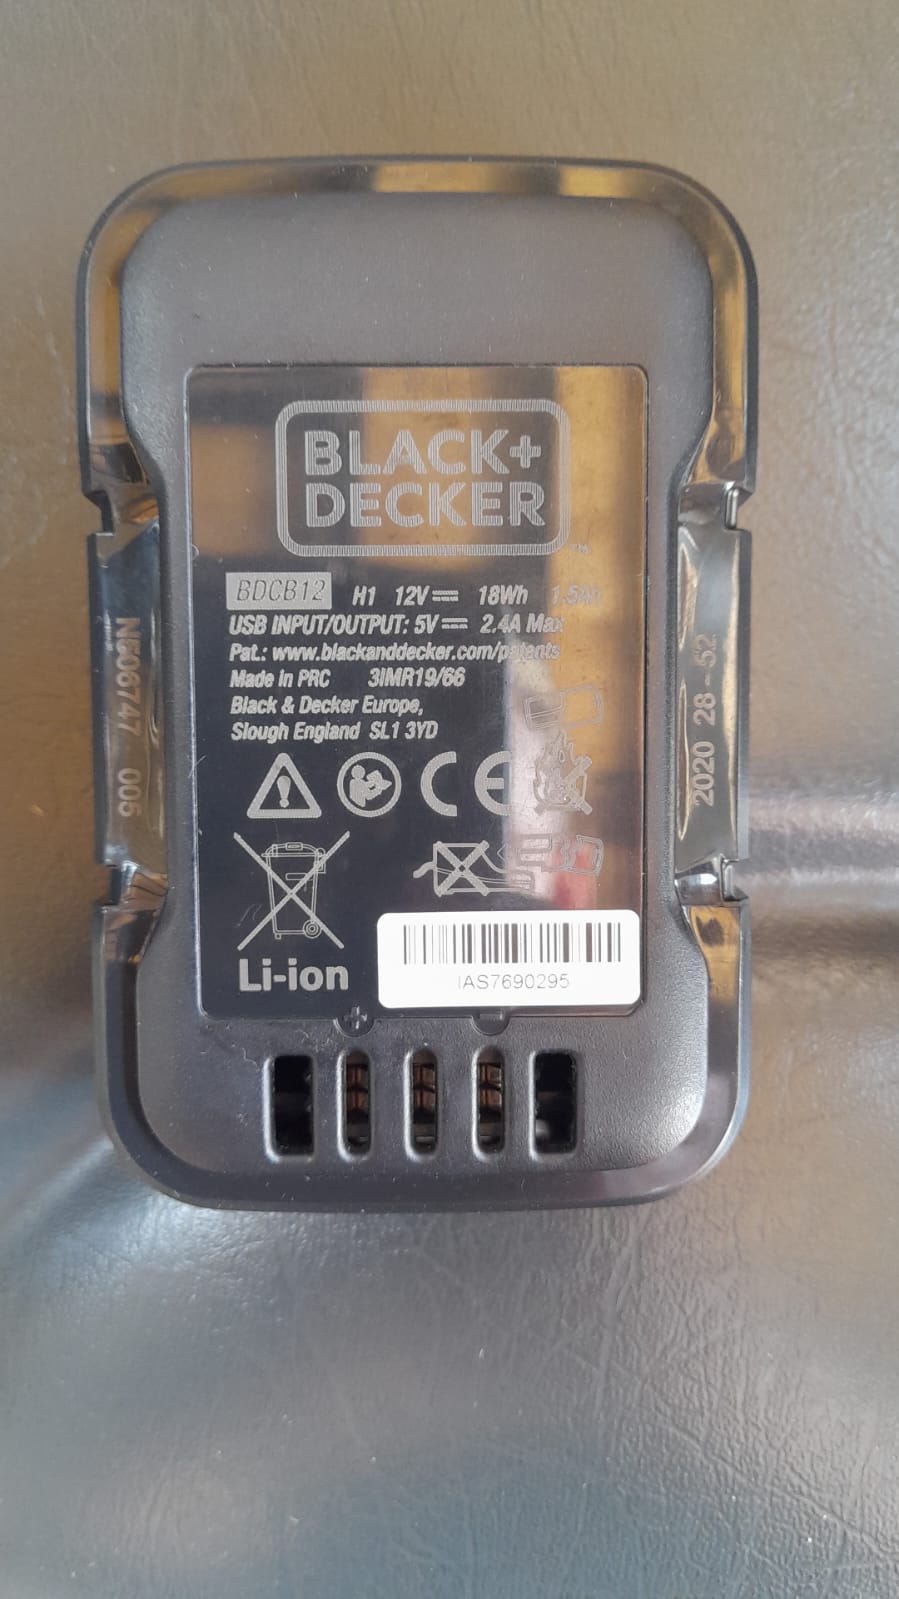 Black & Decker Bdchd12s1-Qw - 12v 1.5ah Cordless Hammer Drill With 2 Speeds In Soft Bag